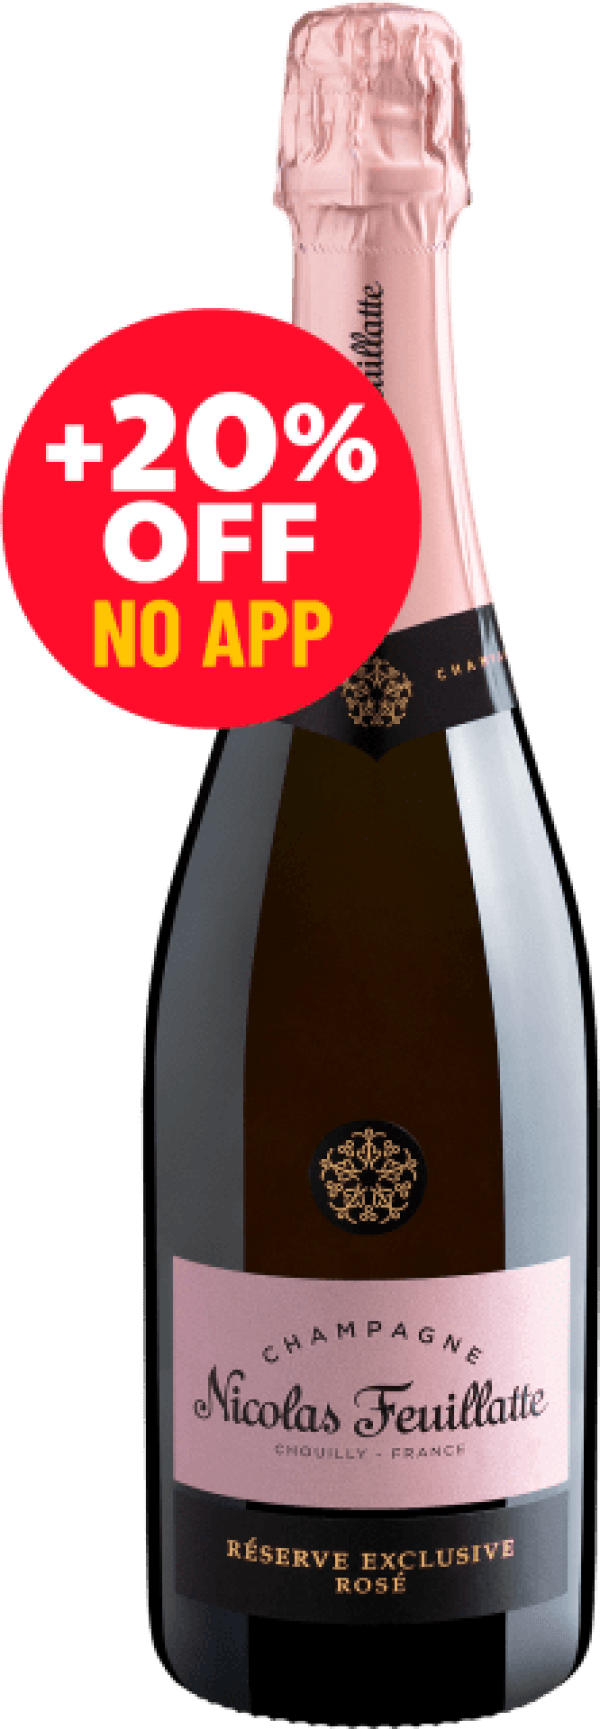 Champagne Nicolas Feuillatte Reserve Exclusive Rose